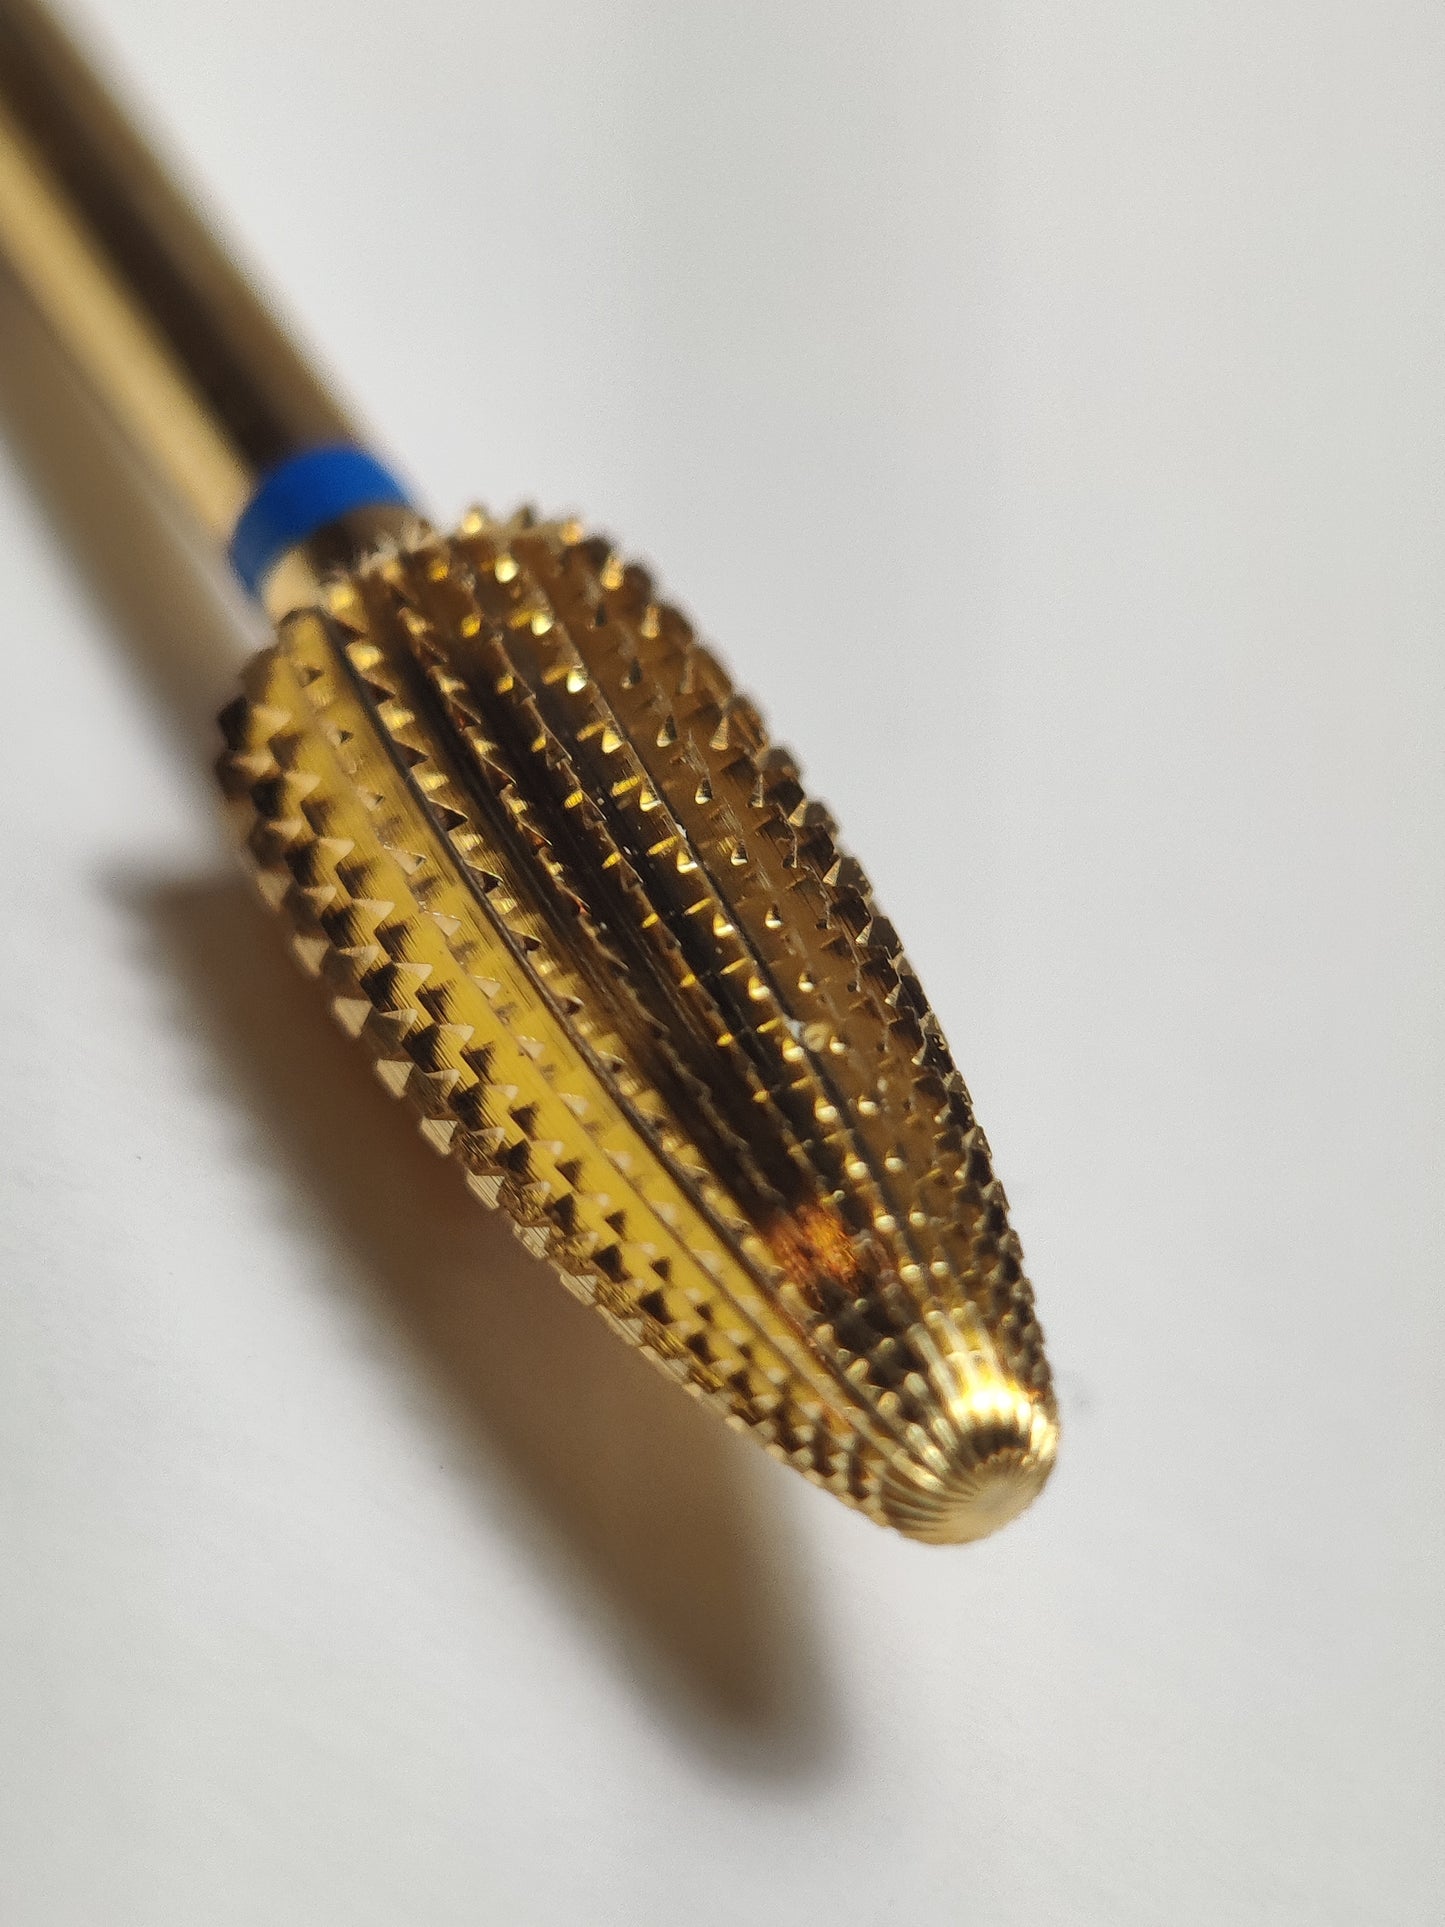 Lisakon - Drill Bit №17 Carbide Gold Medium